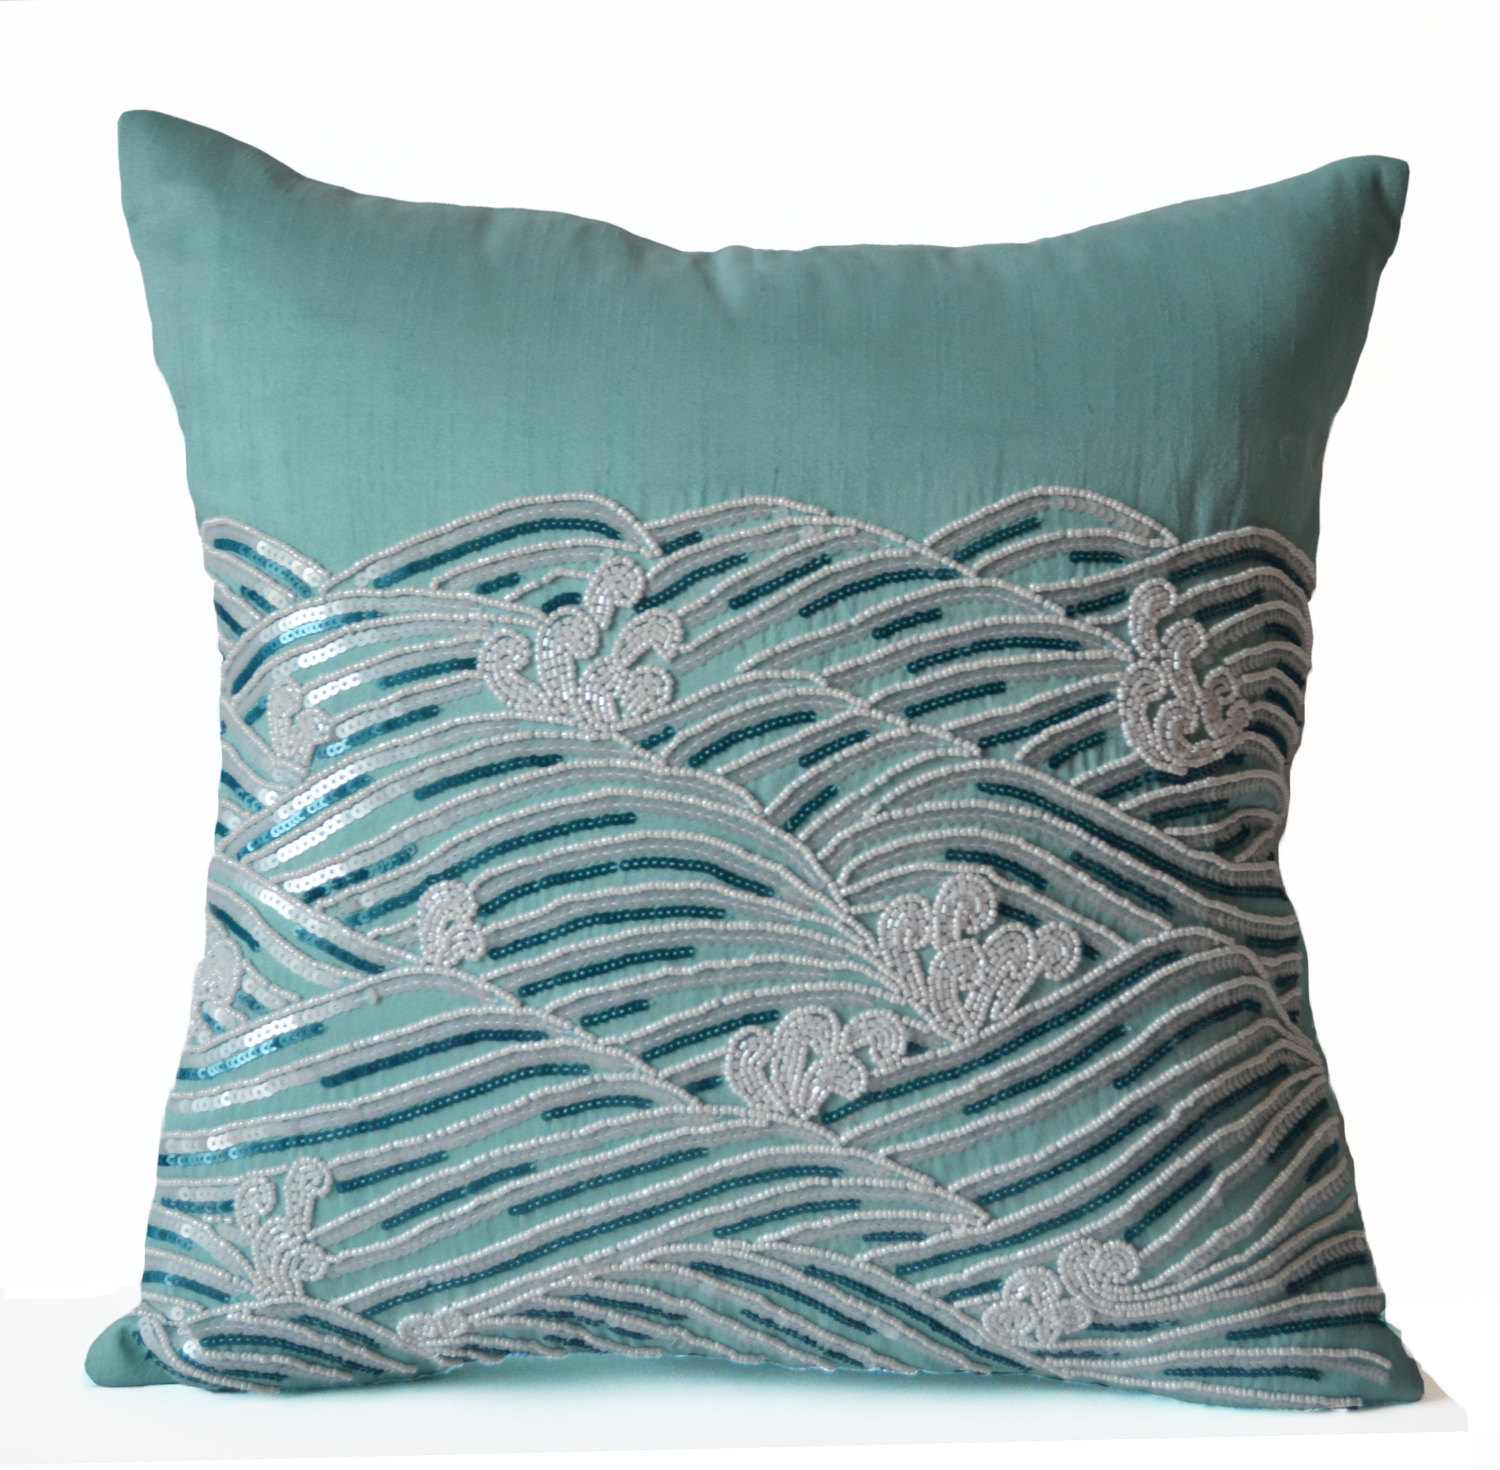 Decorative Throw Pillows | Tellwut.com